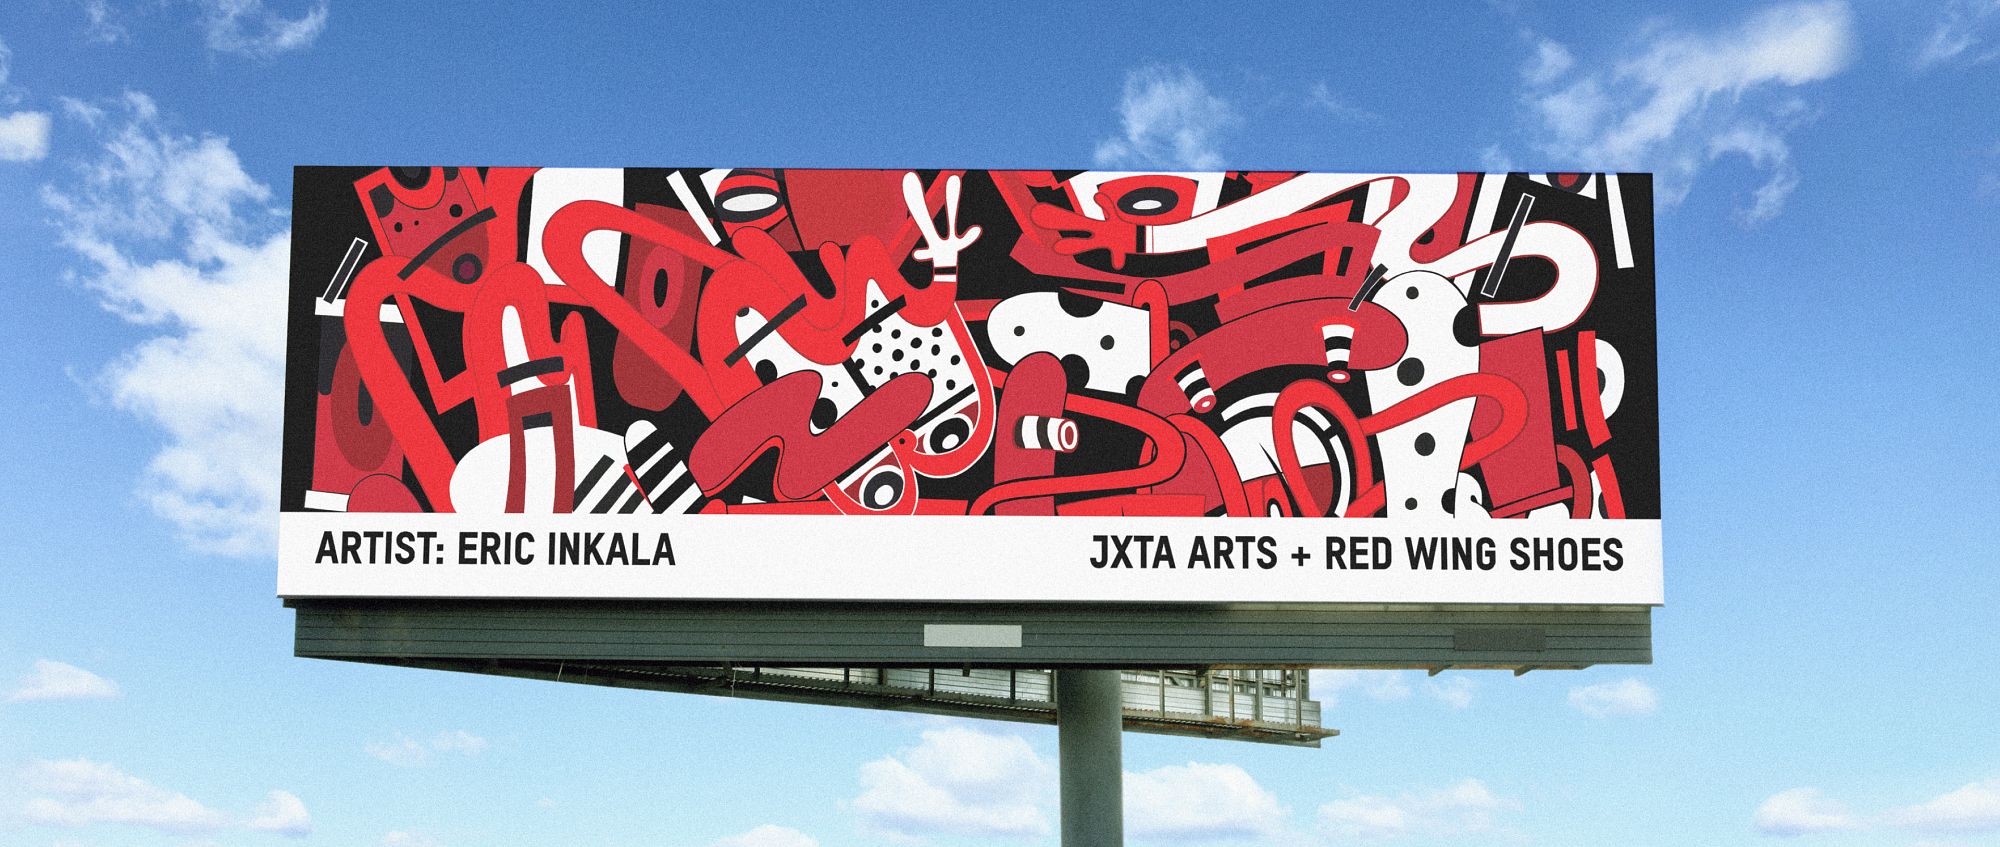 Artist: Eric Inkala - JXTA Arts + Red Wing Shoes